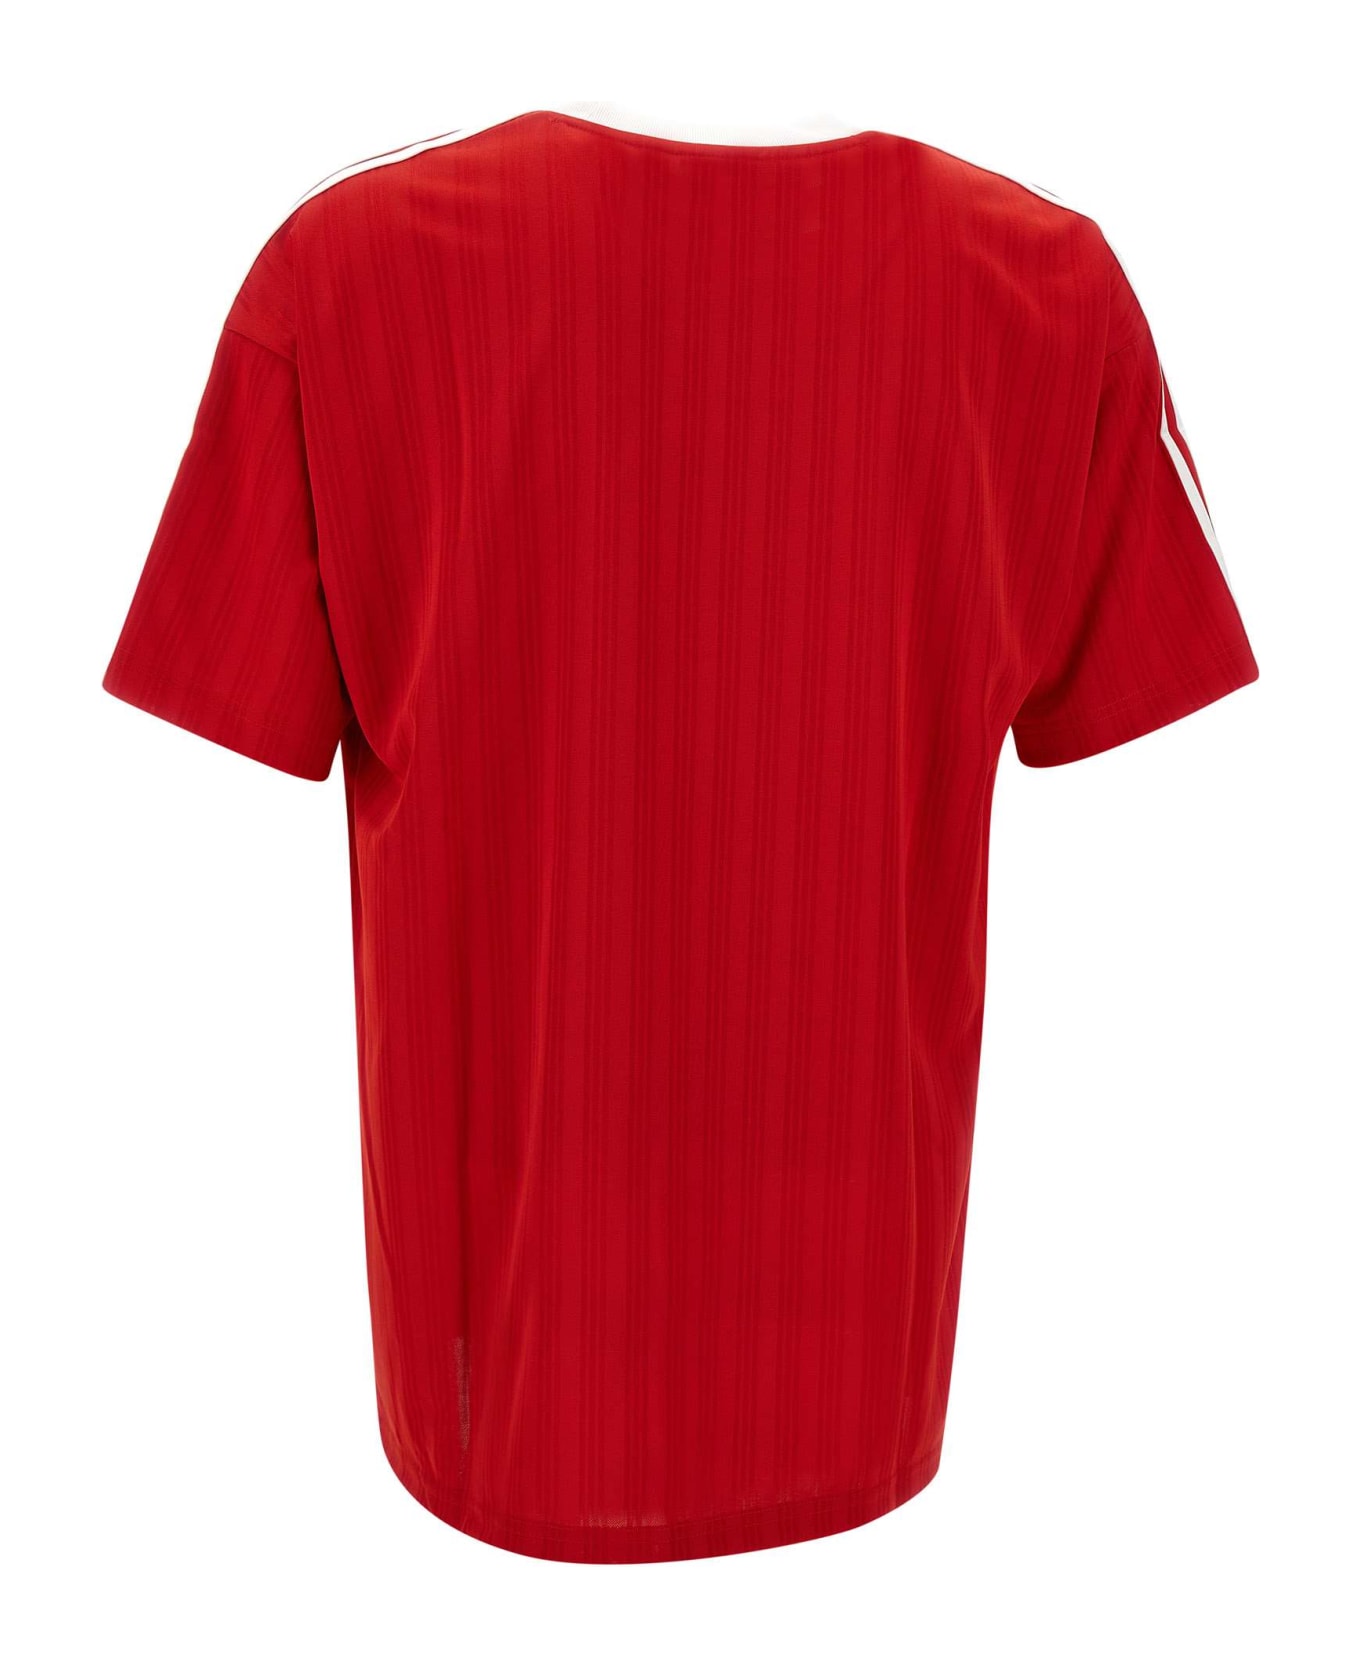 Adidas "adicolor" Jacquard Fabric T-shirt - RED